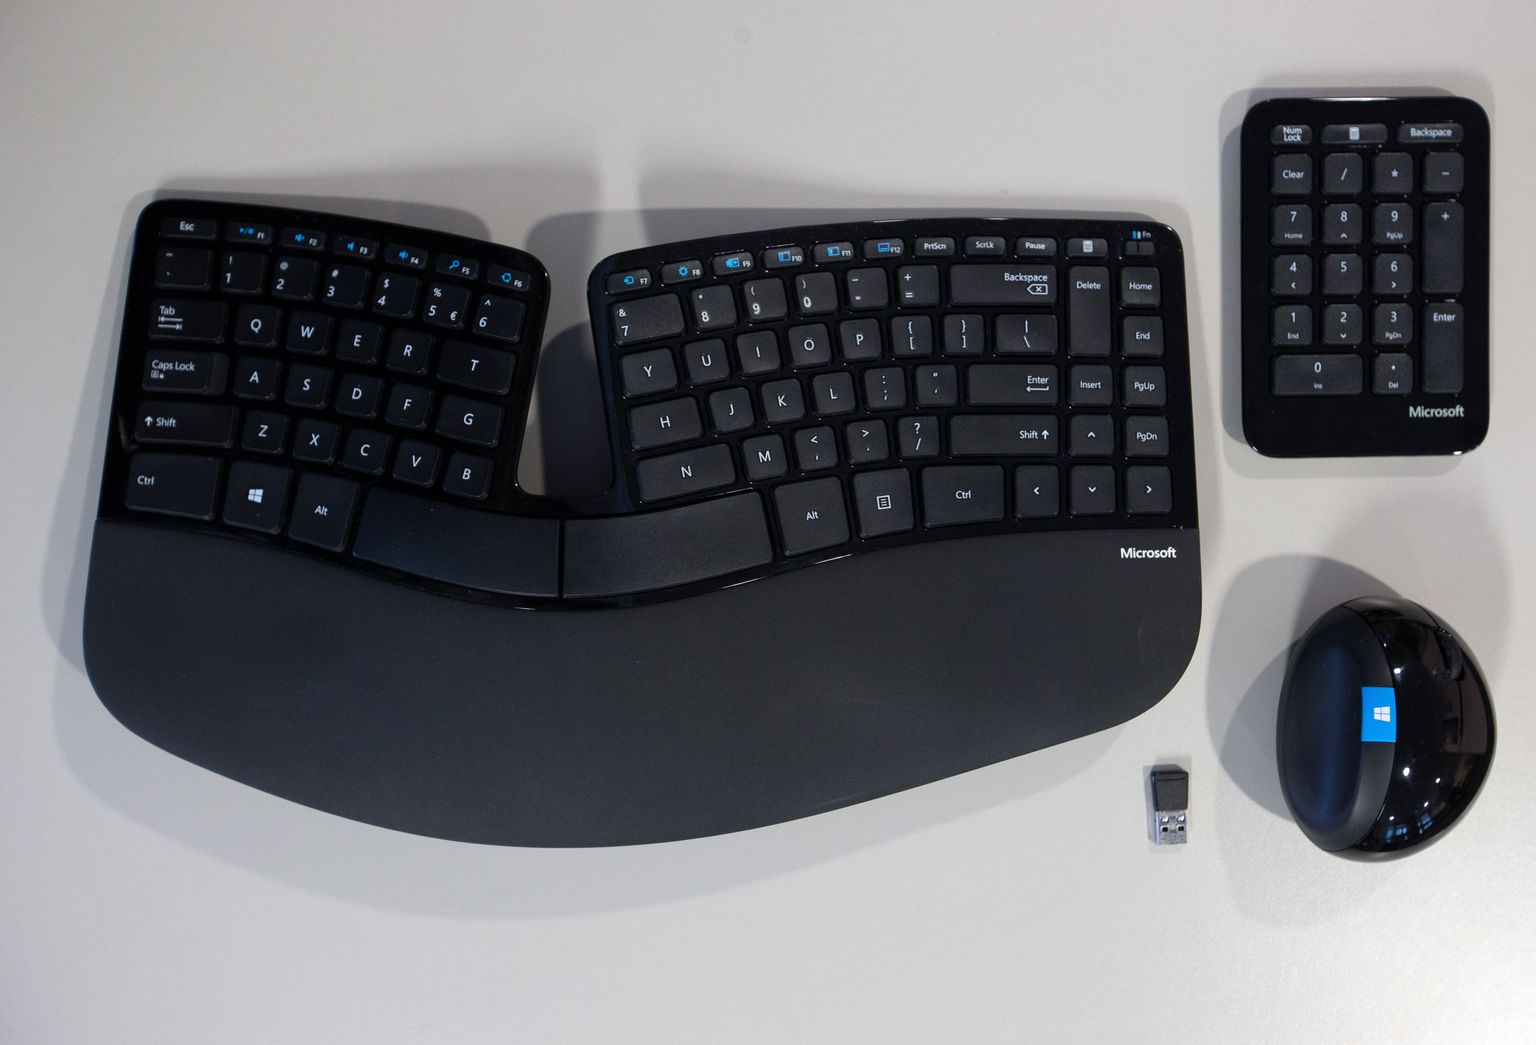 Microsoft Sculpt Ergonomic ehk ergonoomiline klaviatuur ja hiir ning eraldi numbriklahvistik.